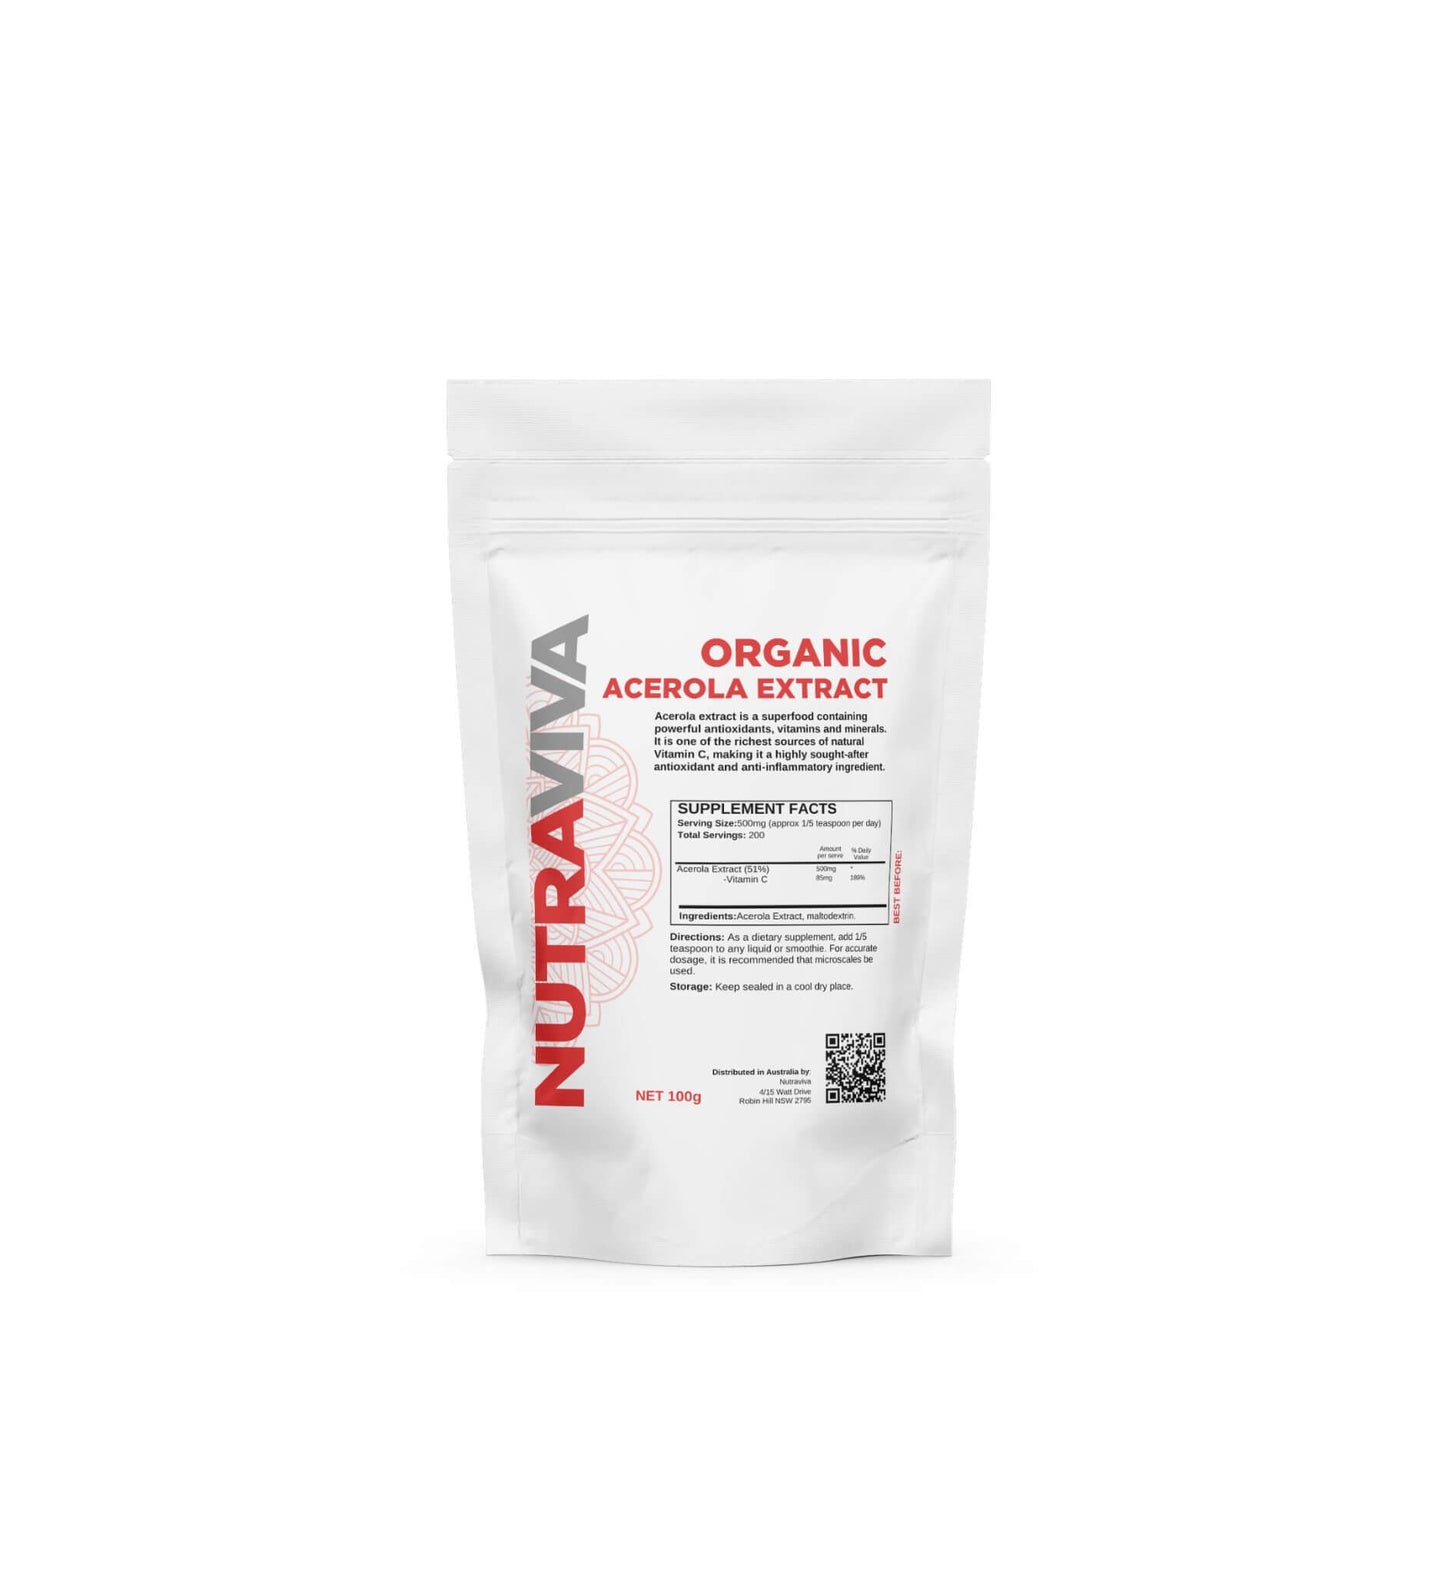 Organic Acerola Extract Powder 800g